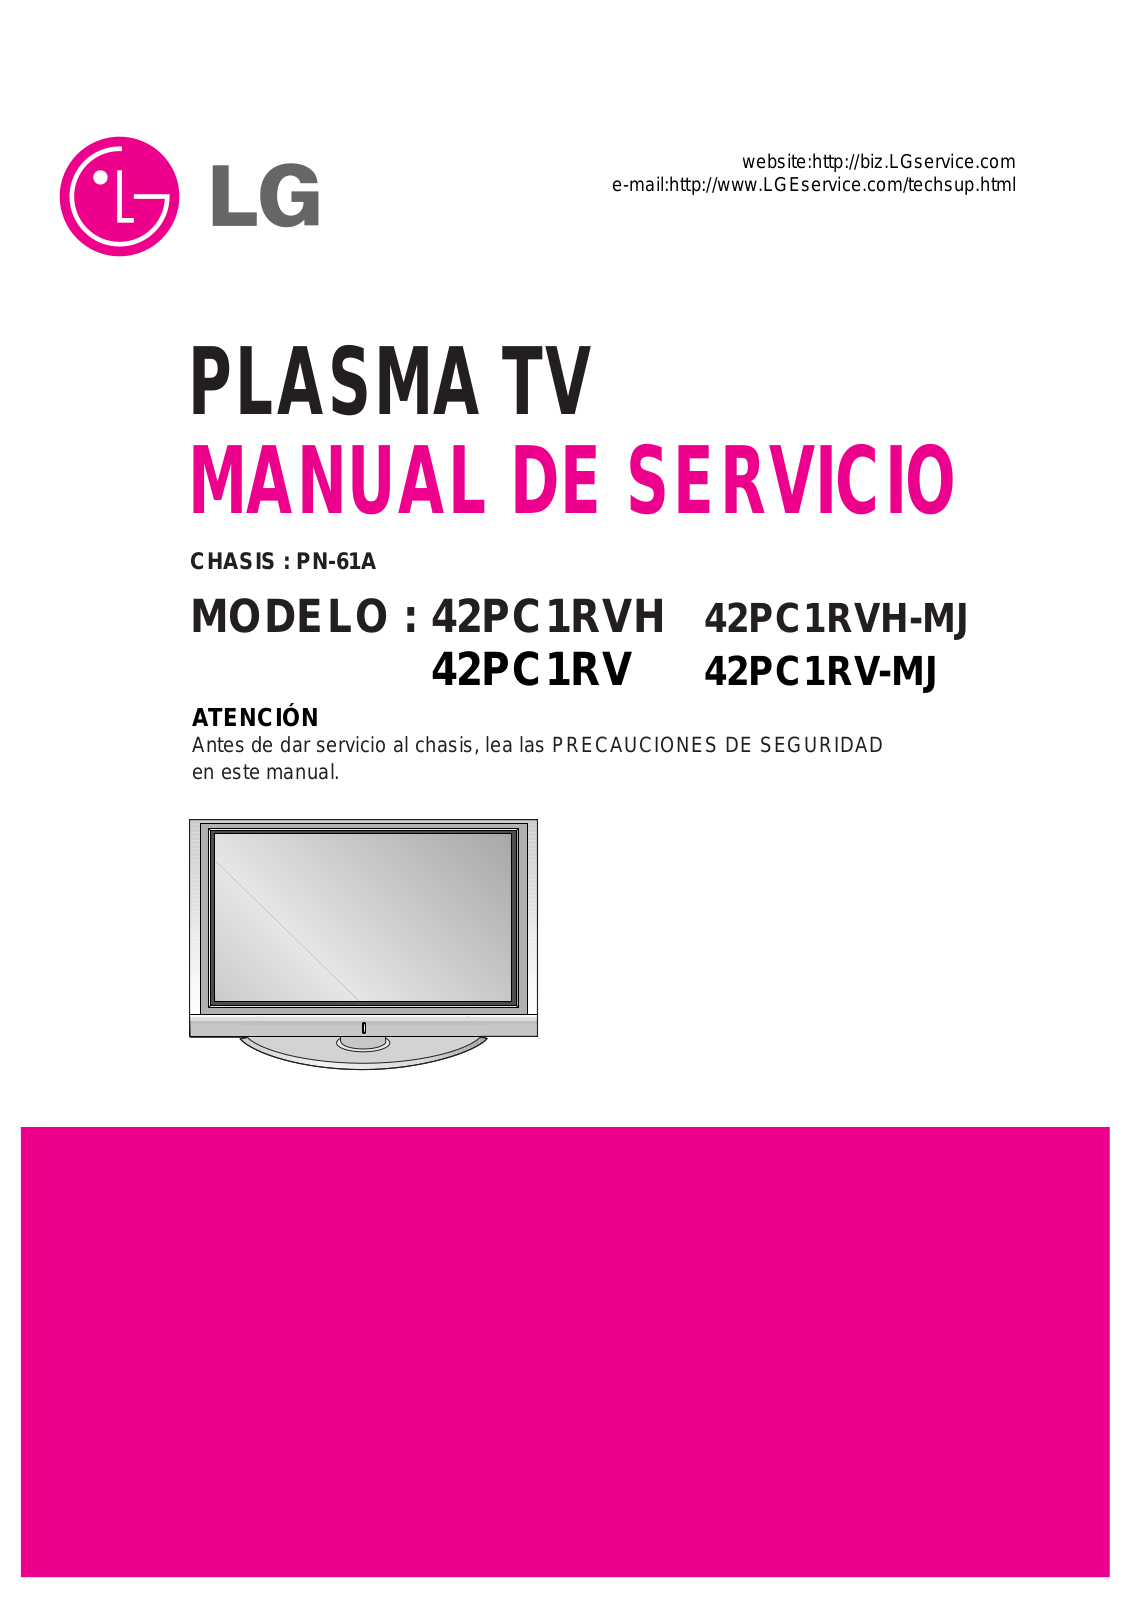 LG 42PC1RVH, 42PC1RVH-MJ, 42PC1RV, 42PC1RV-MJ Service Manual